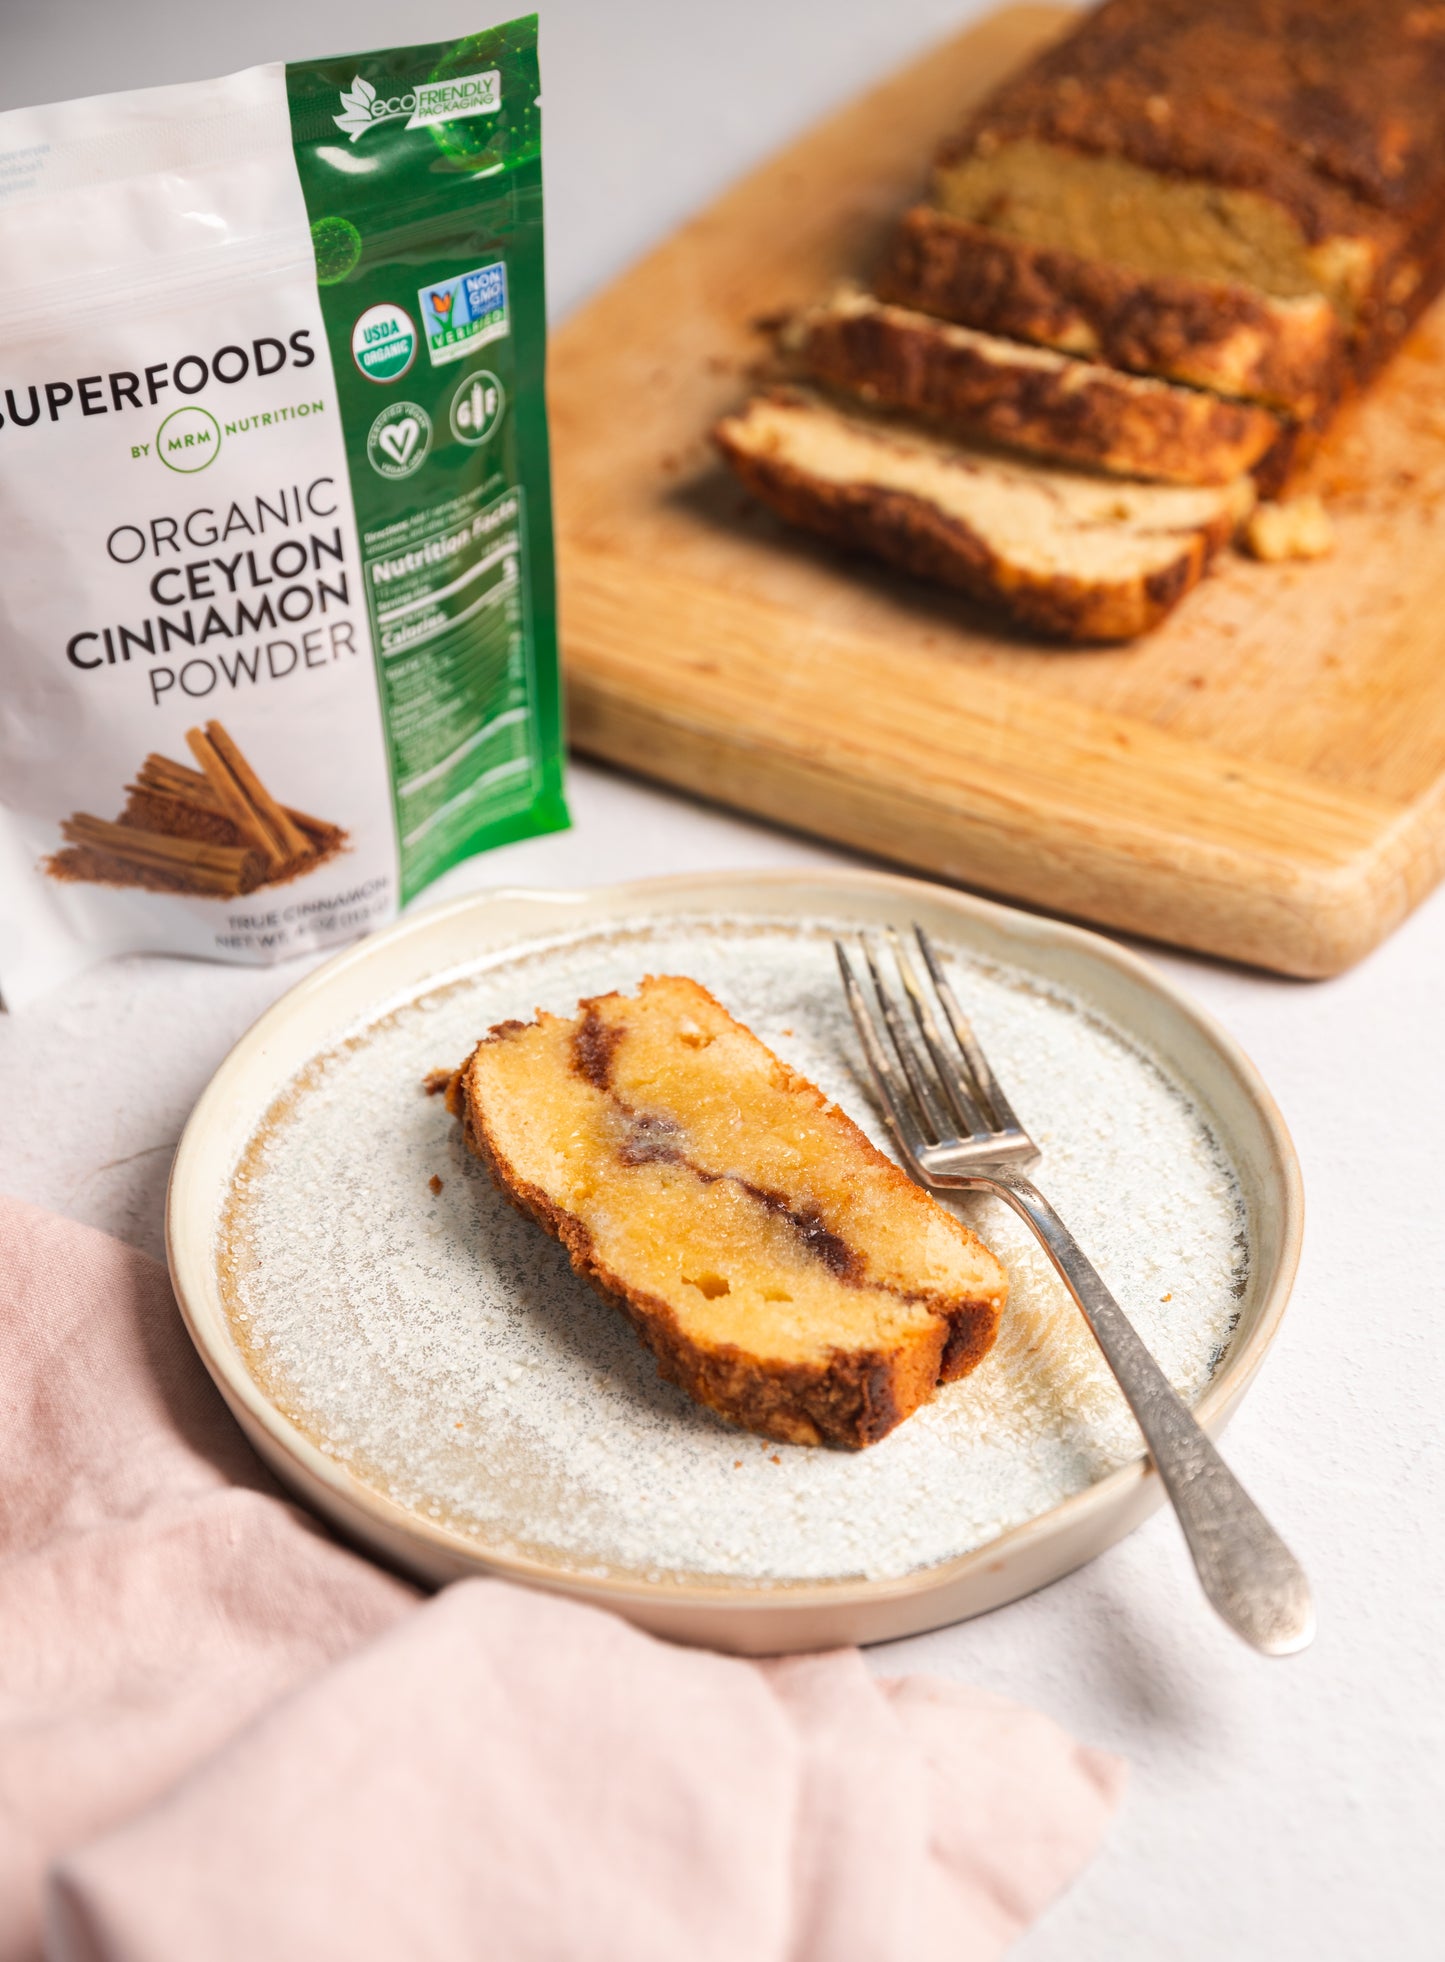 Superfoods - Organic Ceylon Cinnamon Powder